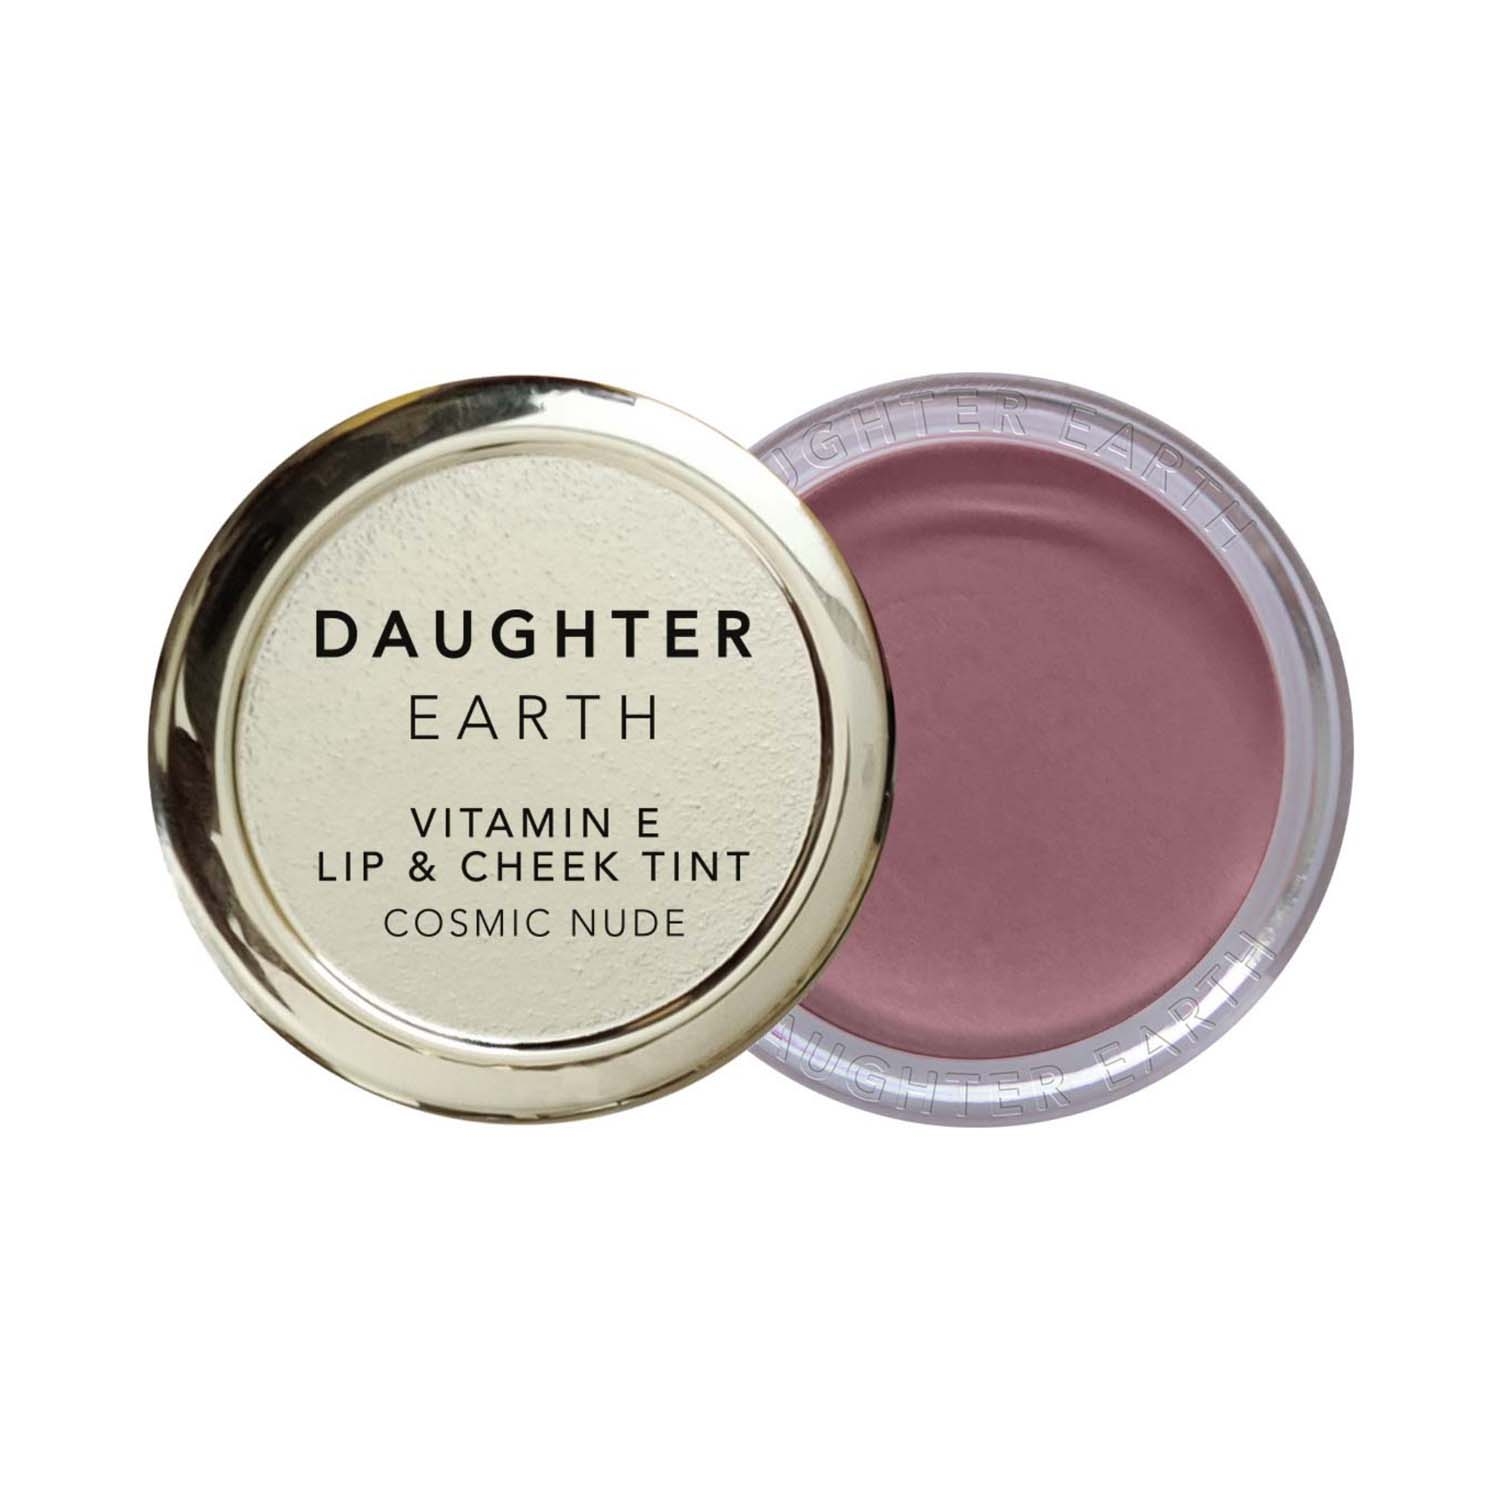 DAUGHTER EARTH | DAUGHTER EARTH Vitamin E Lip & Cheek Tint - Cosmic Nude (4.5g)